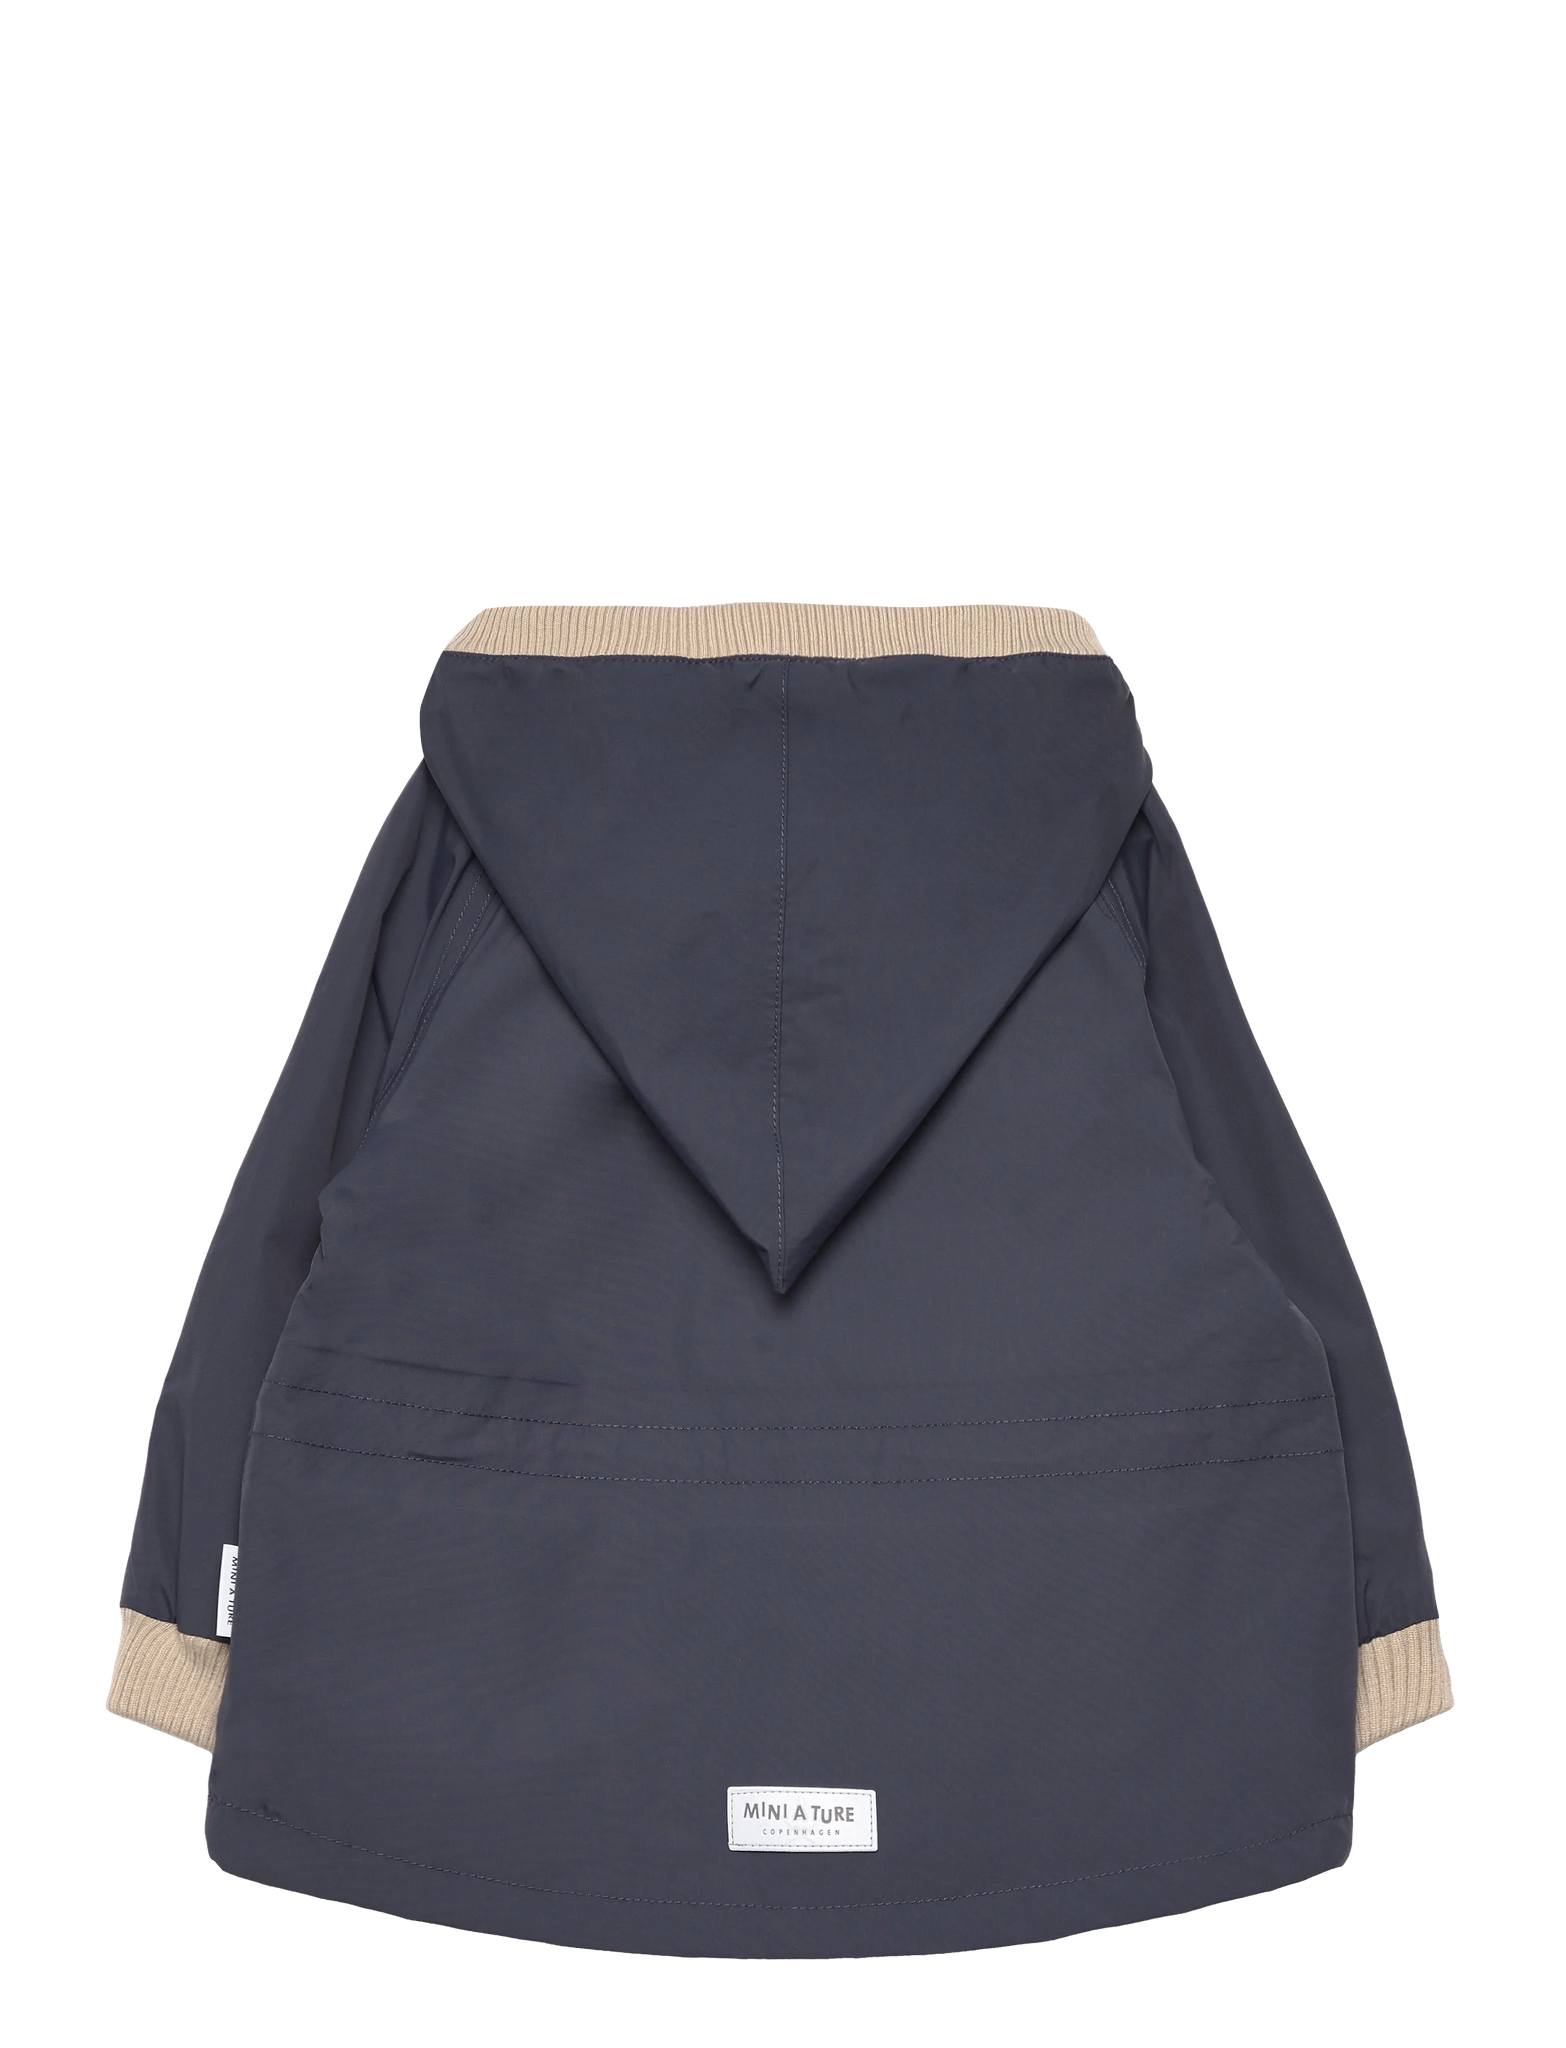 Mini a Ture - MATWAI fleece lined spring jacket. GRS ombre blue